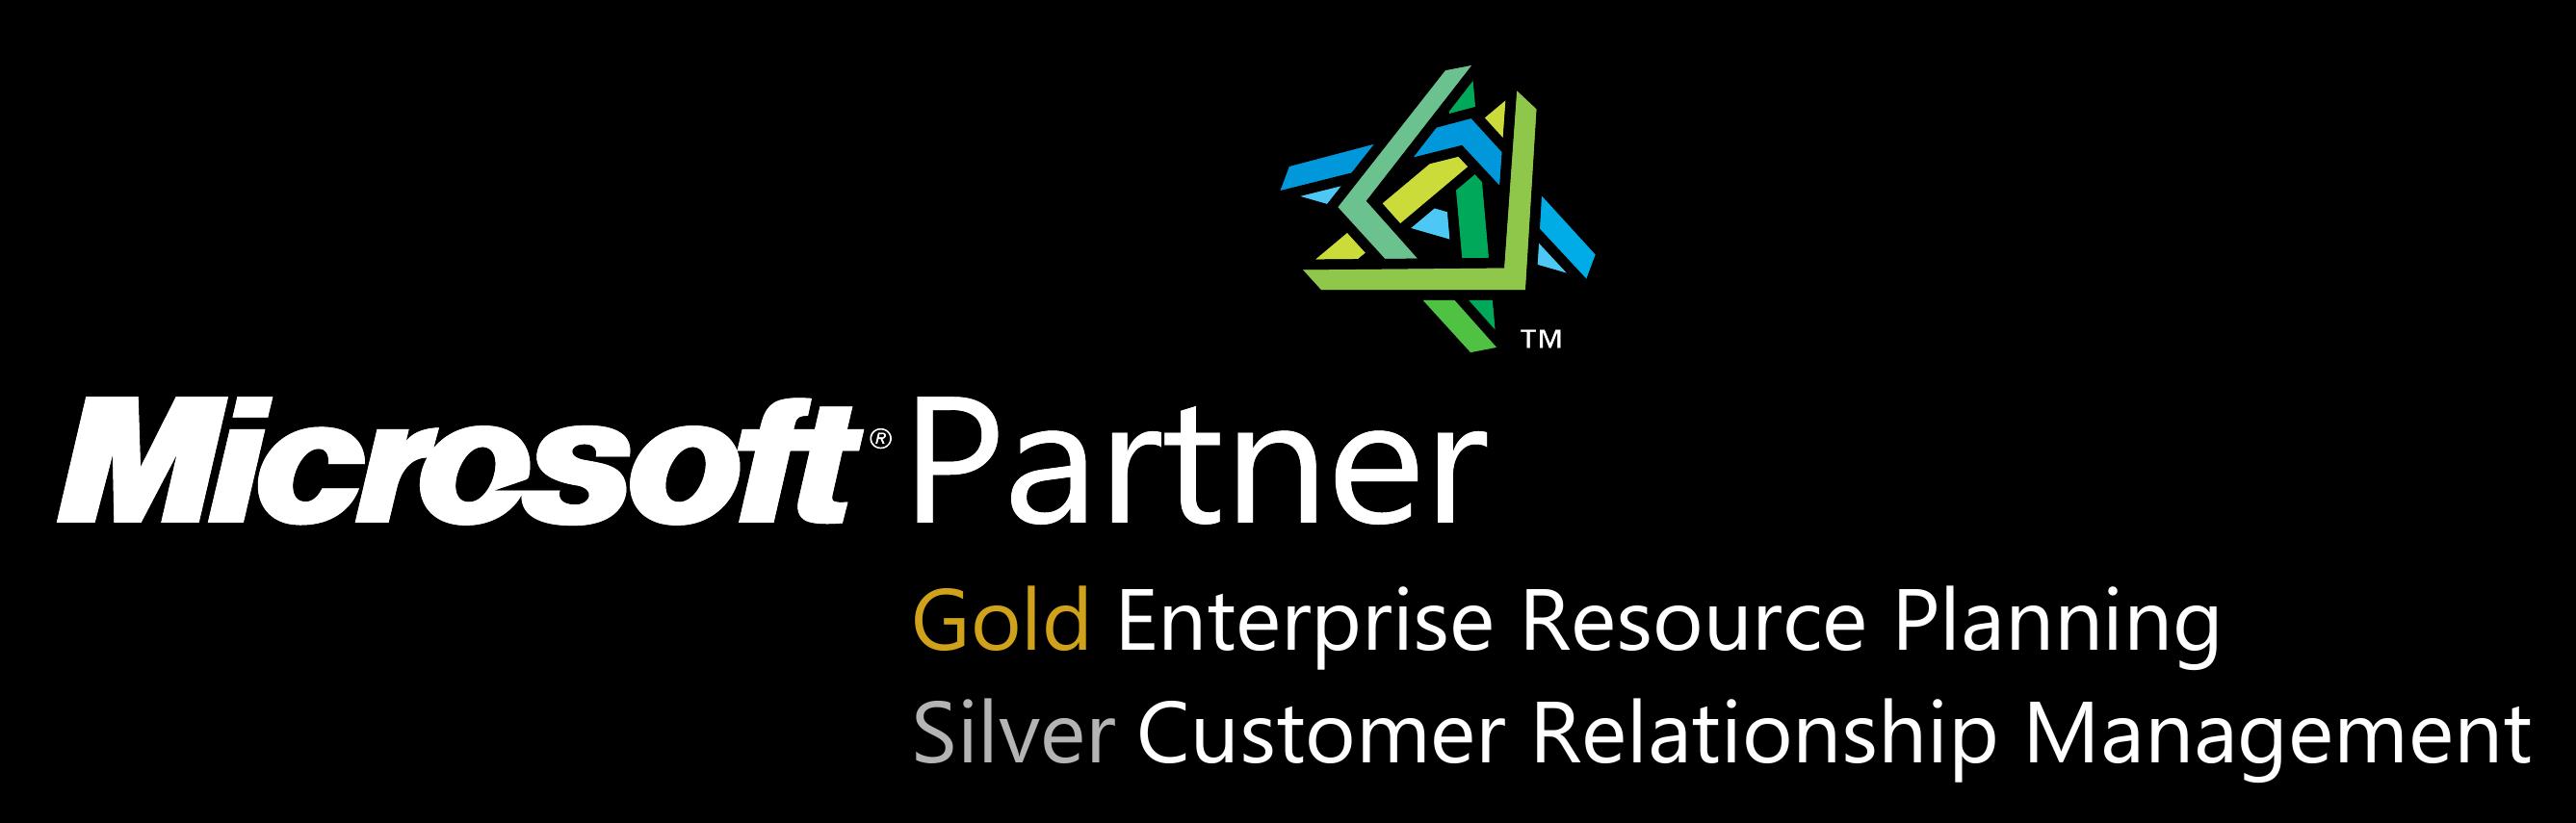 Microsoft Partner: Gold Enterprise Resource Planning